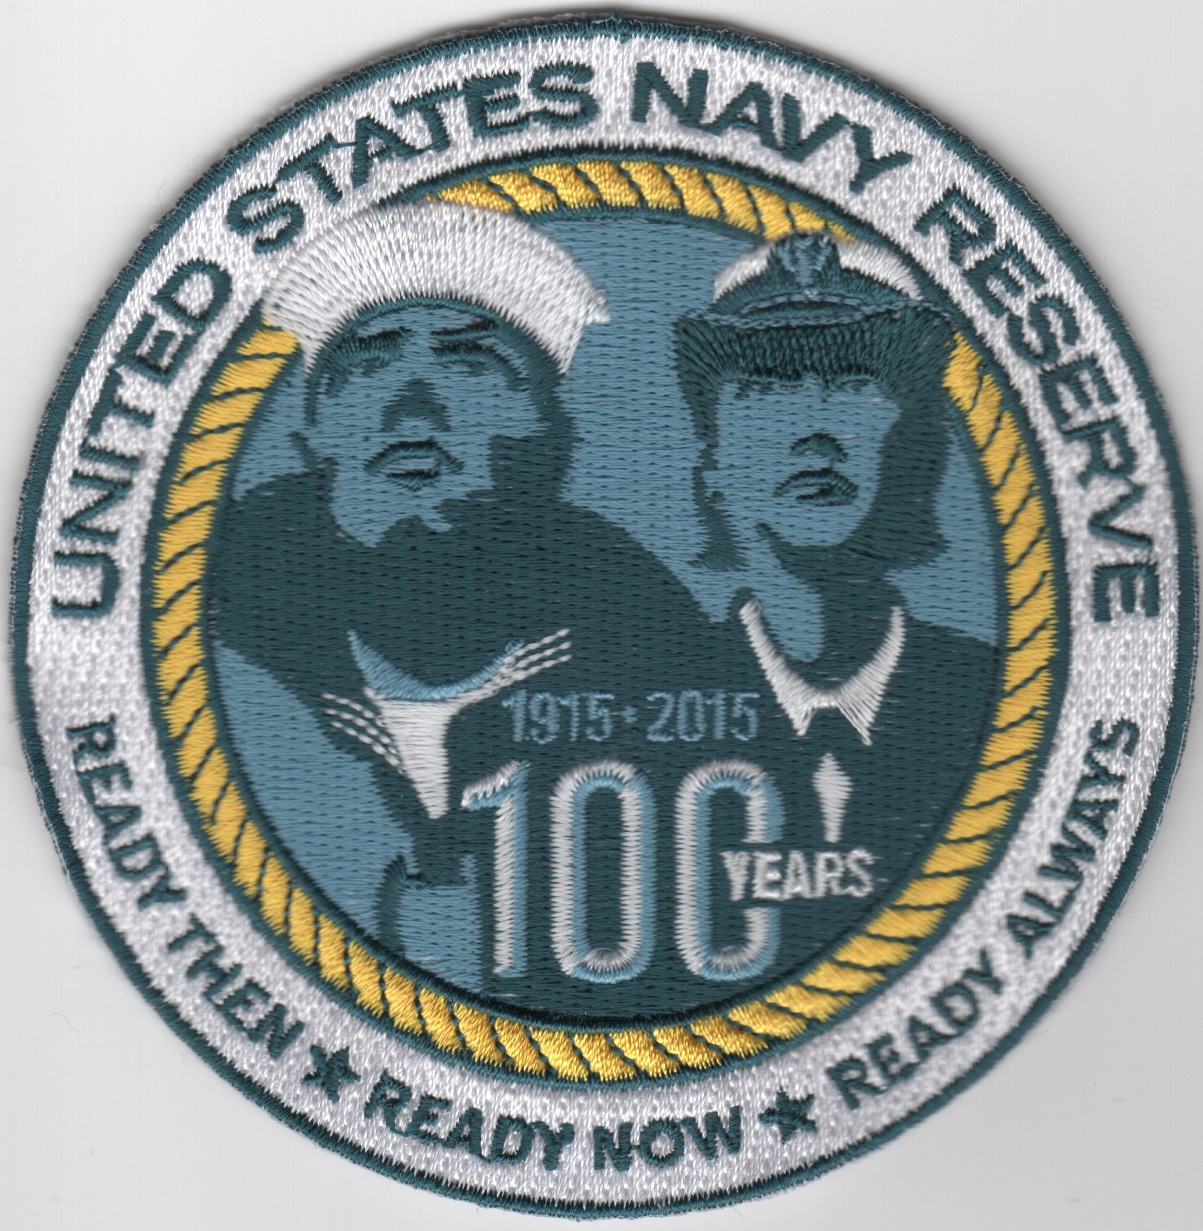 Naval Air Reserve 100th Anniversary (Round)